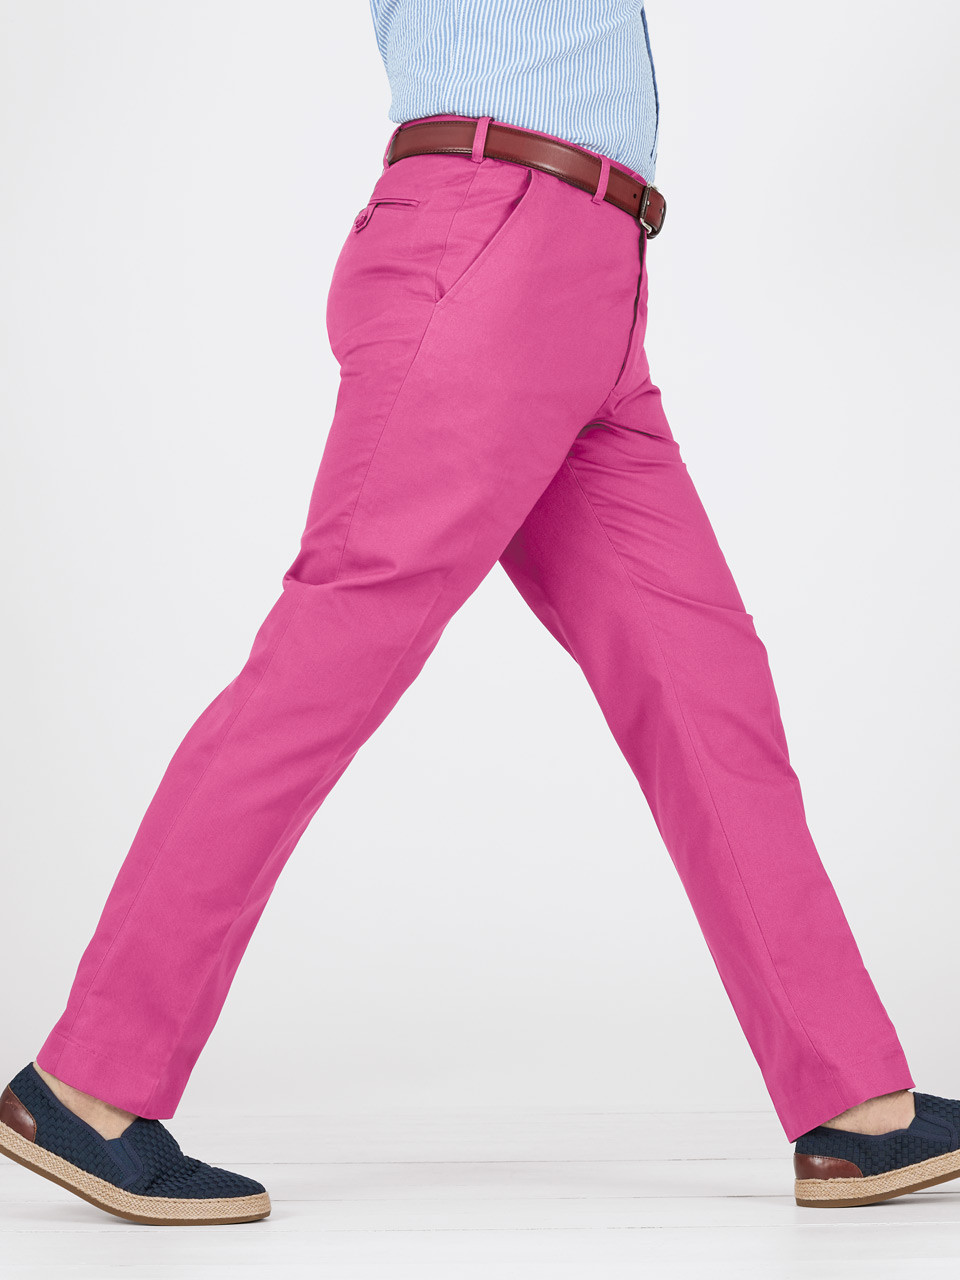 Light Blue Blazer with Pink Pants | Hockerty